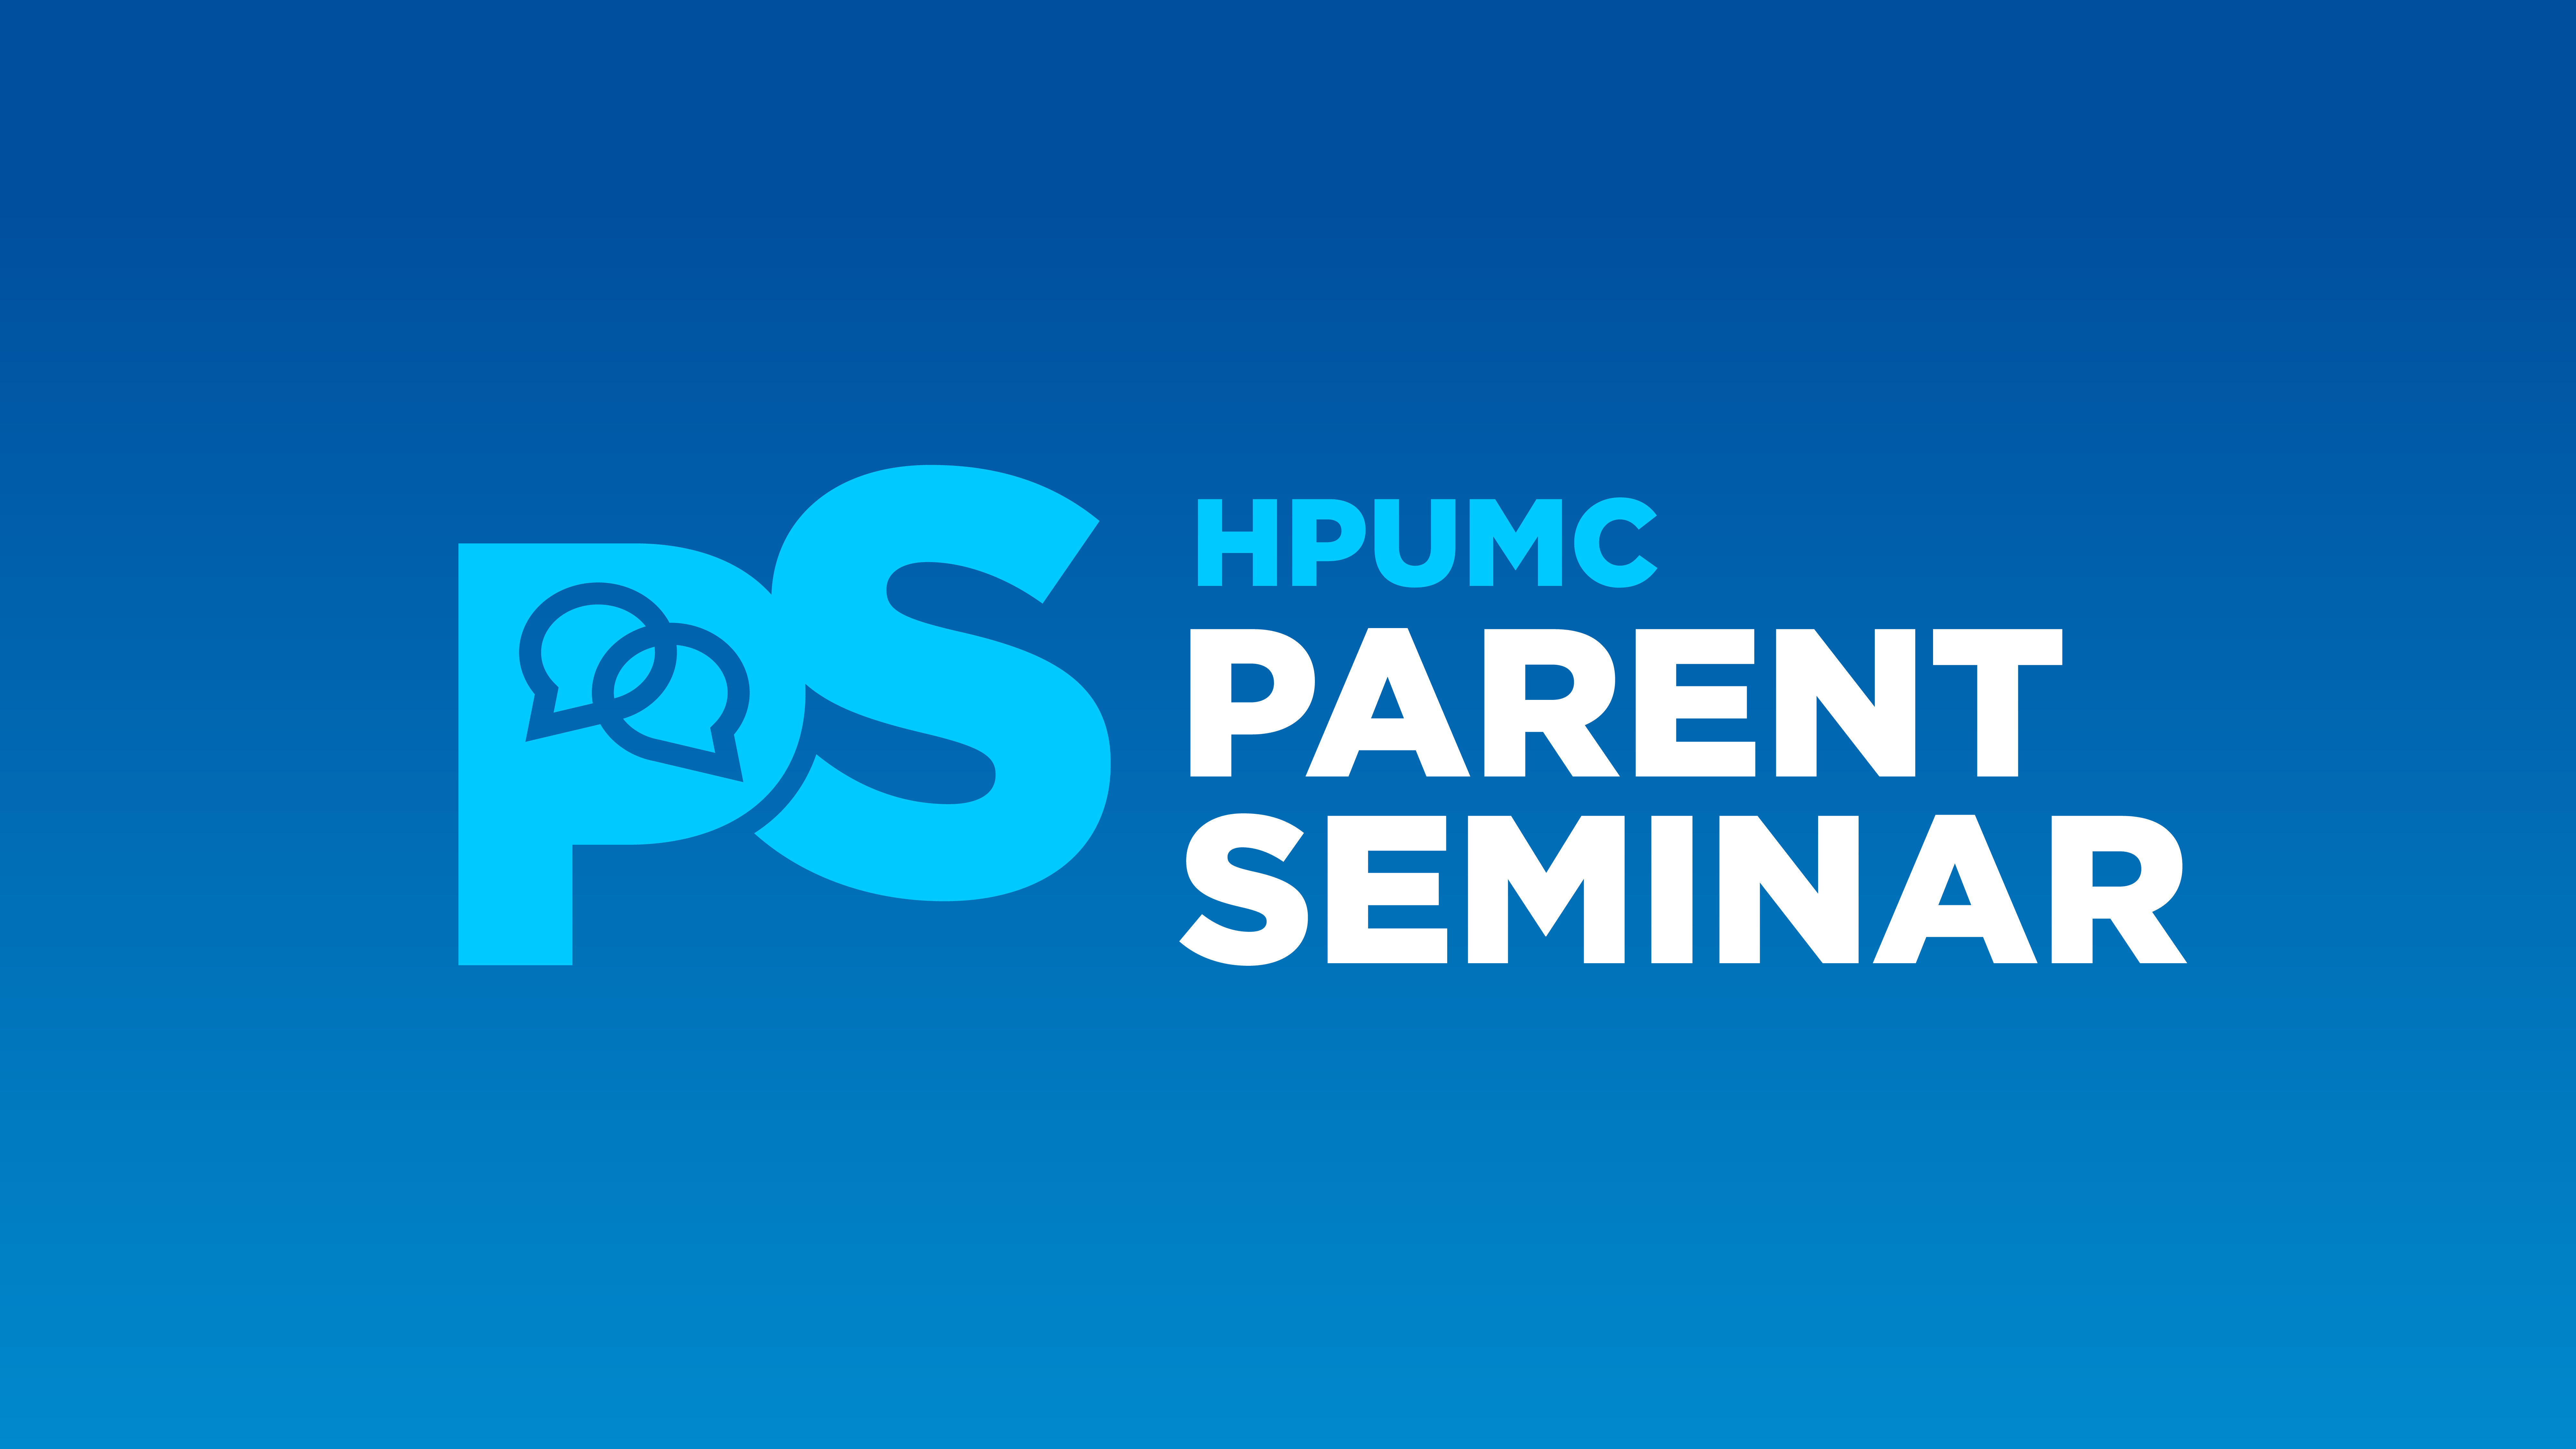 23 Parent Seminar 06